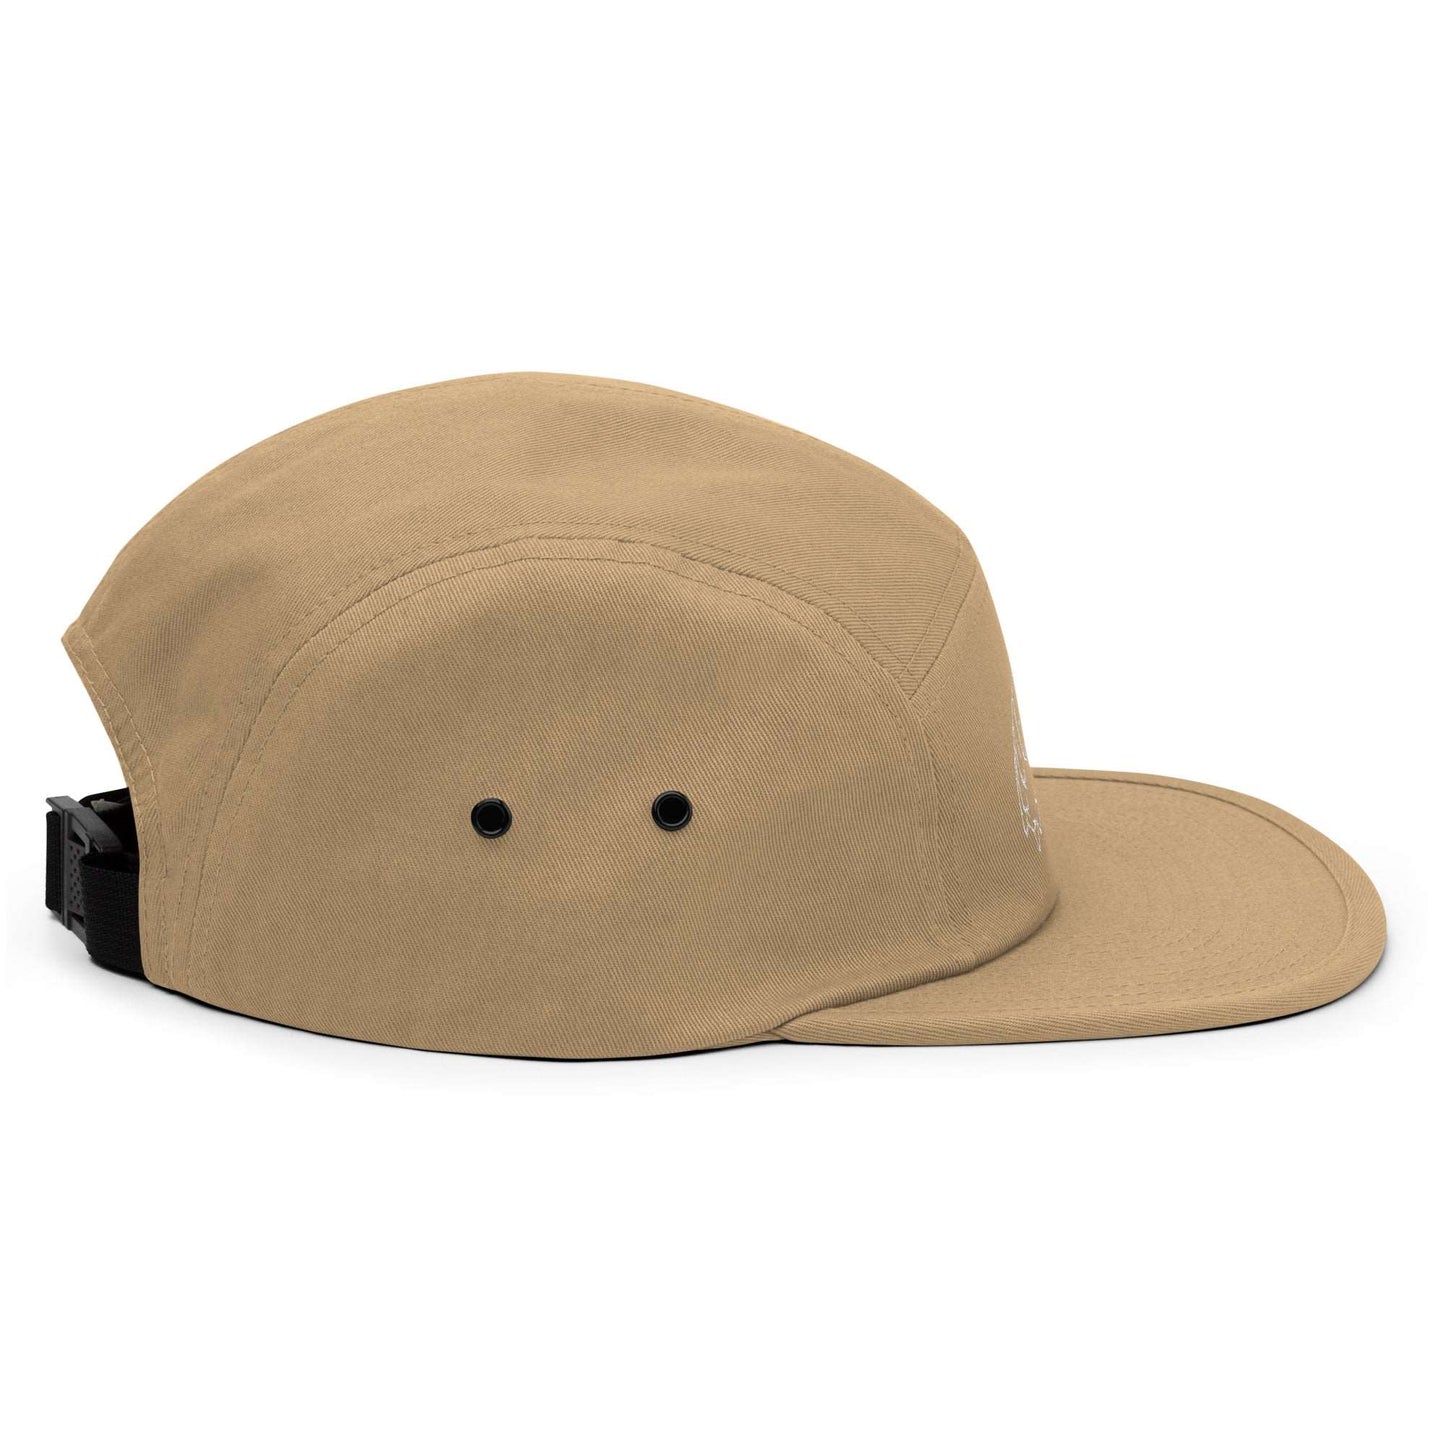 Tardigrade Hat